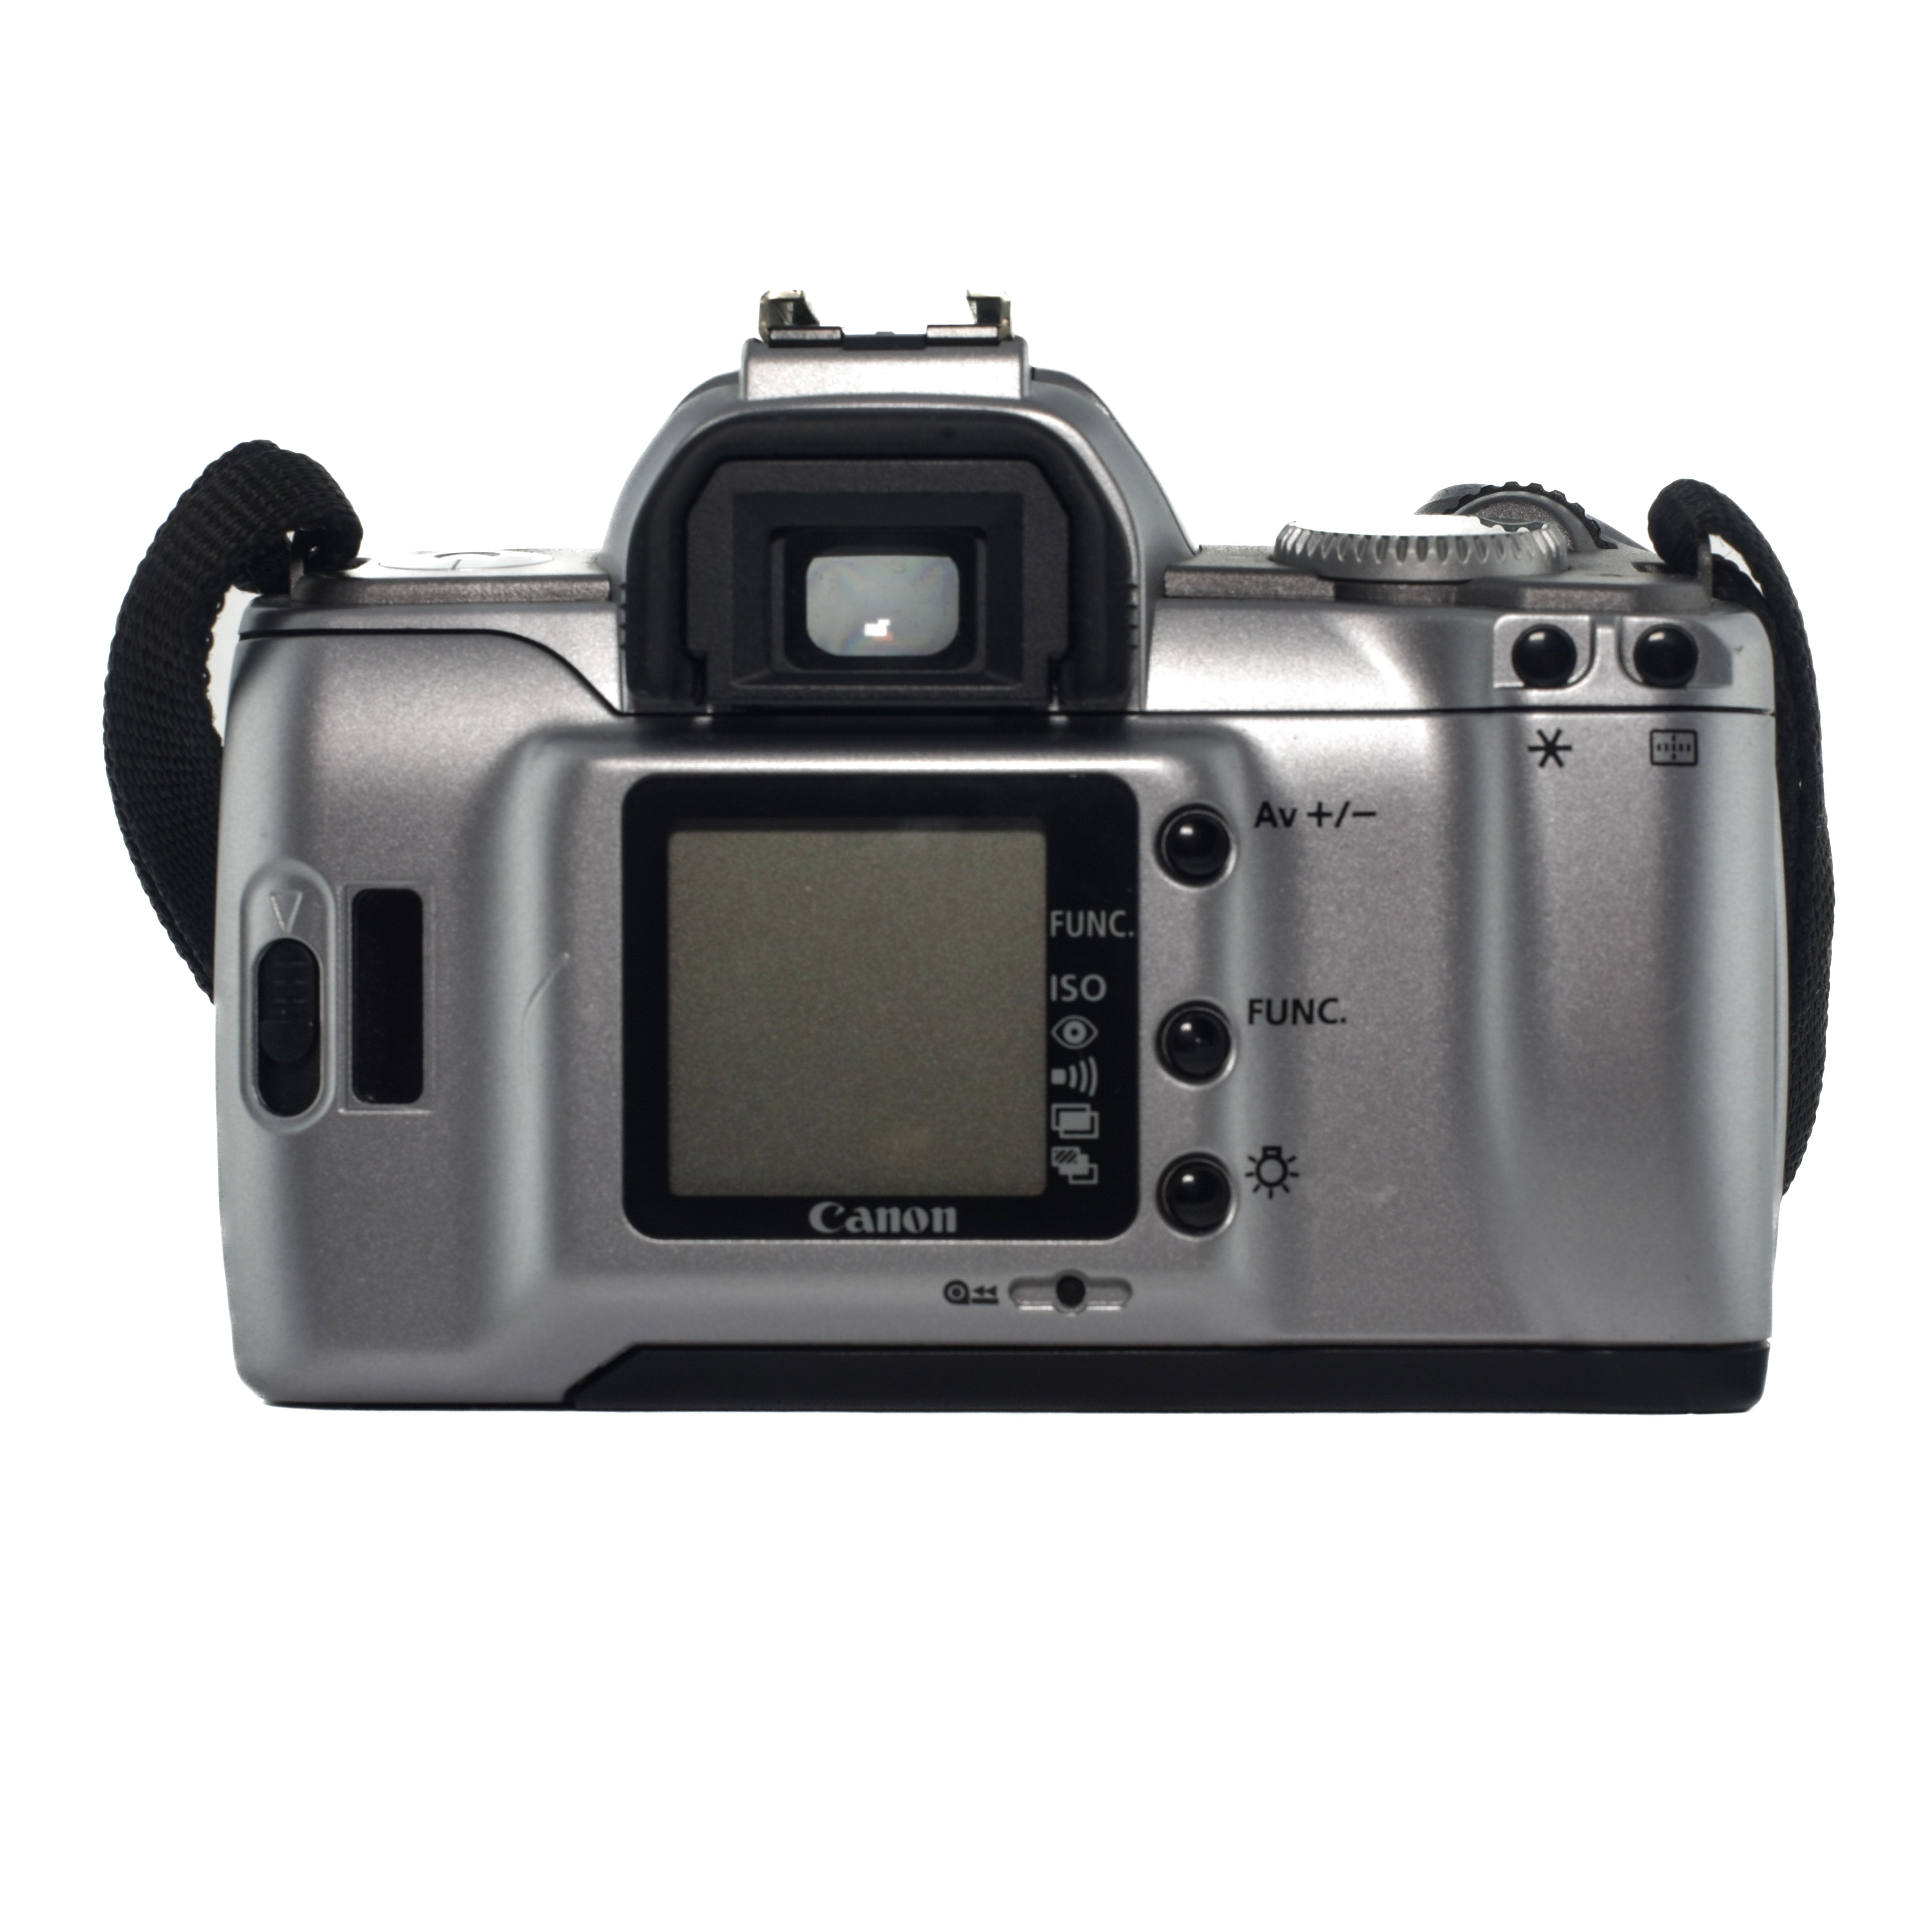 Pre-Owned Canon EOS 300v 35mm Film Camera & 28-90mm lens